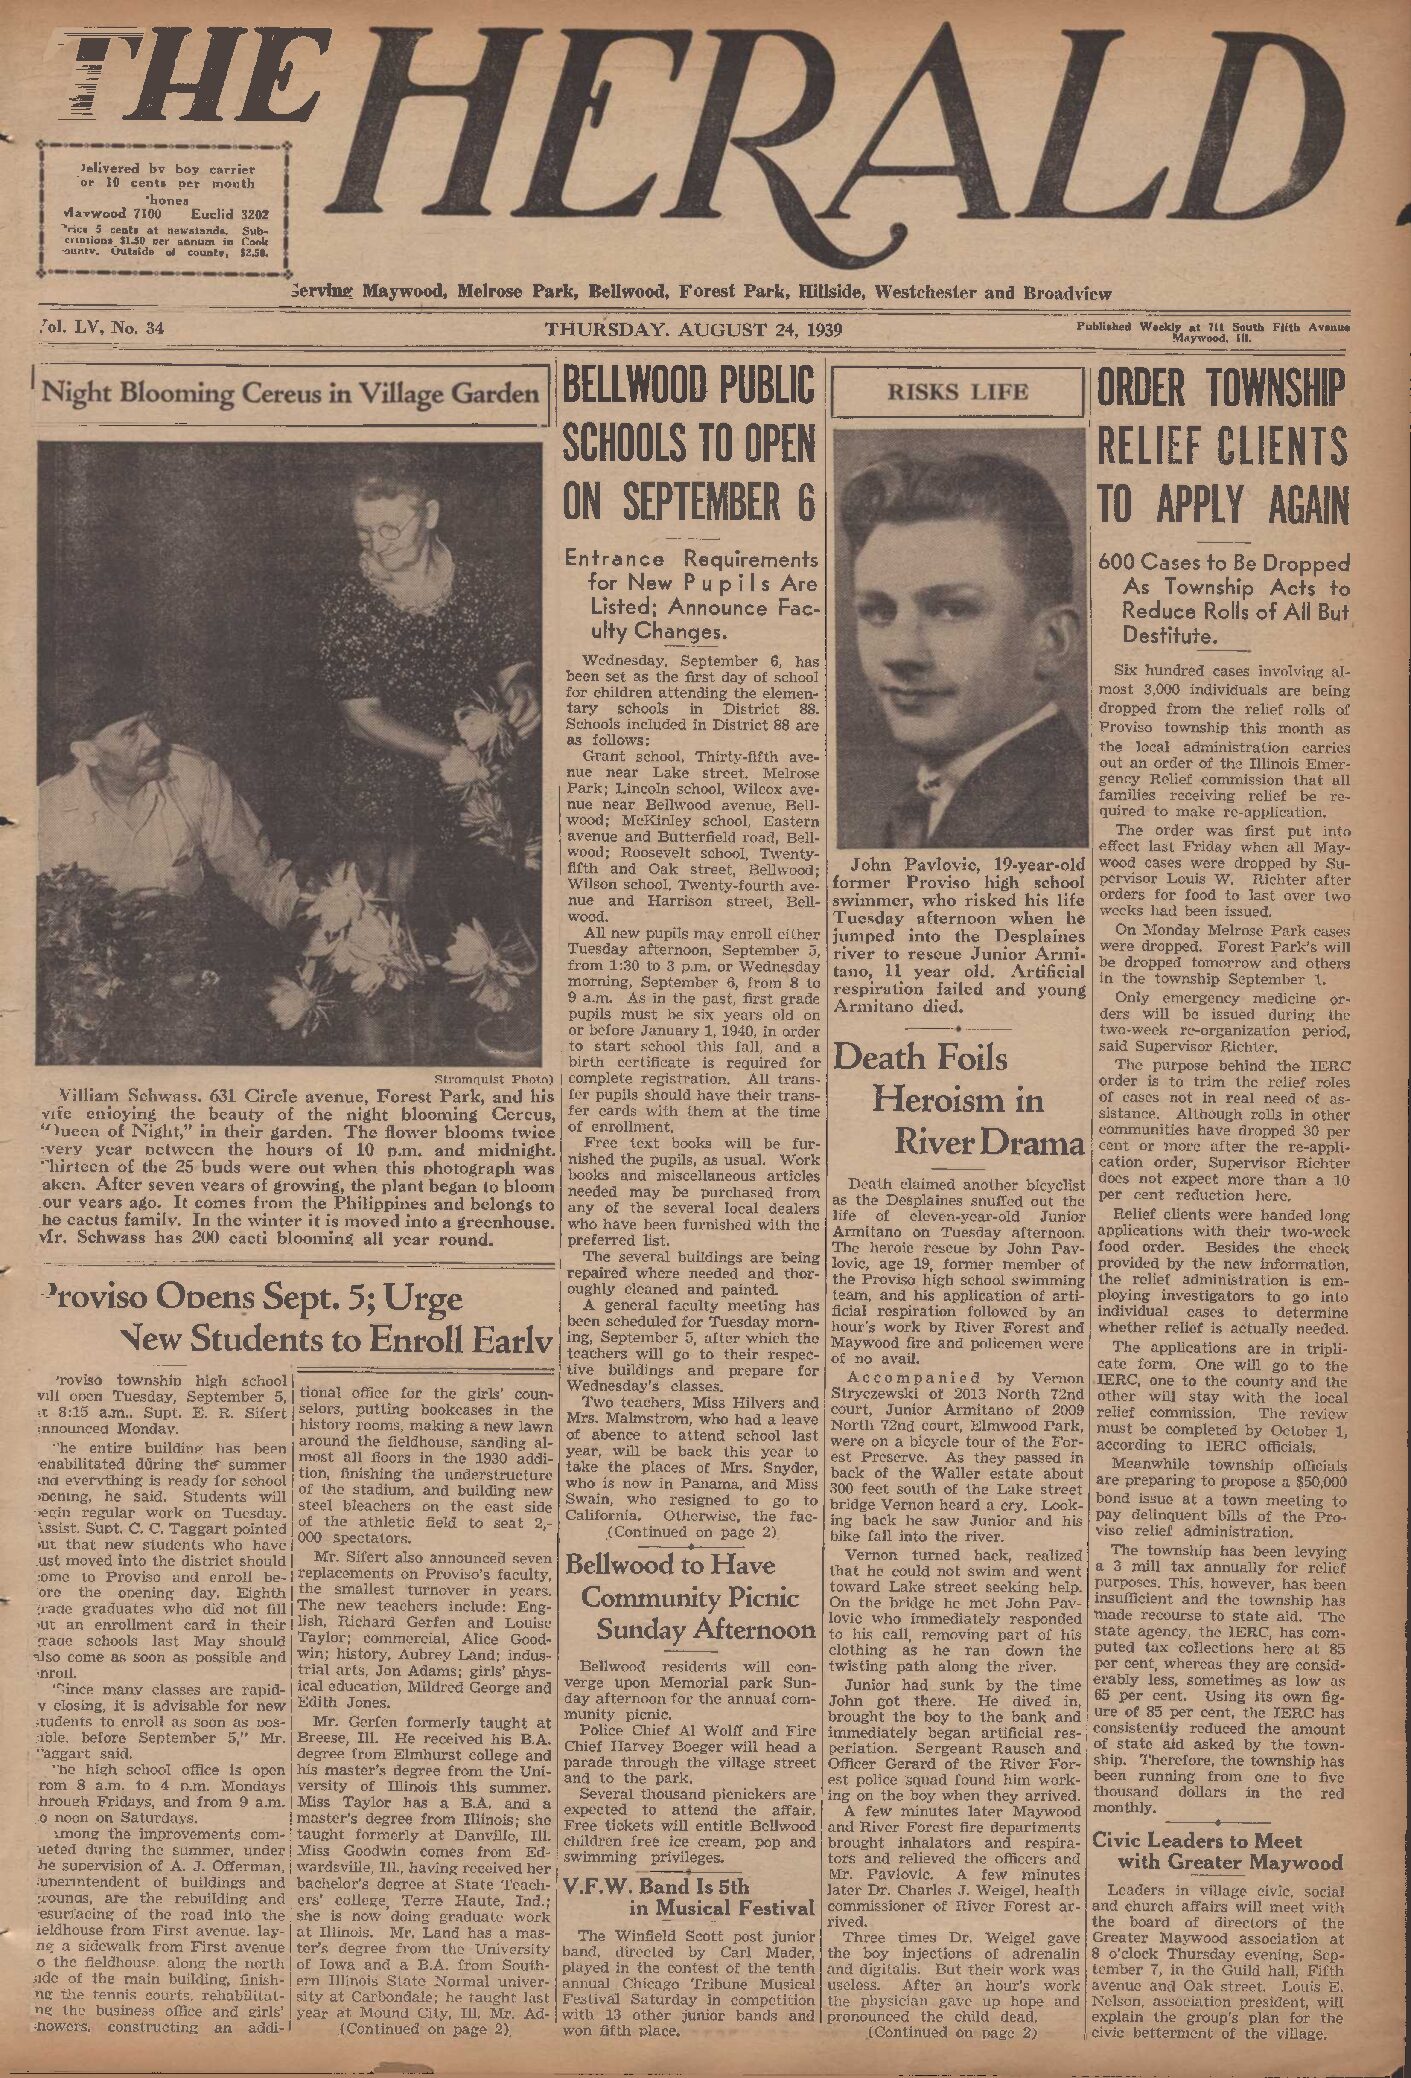 The Herald – 19390824